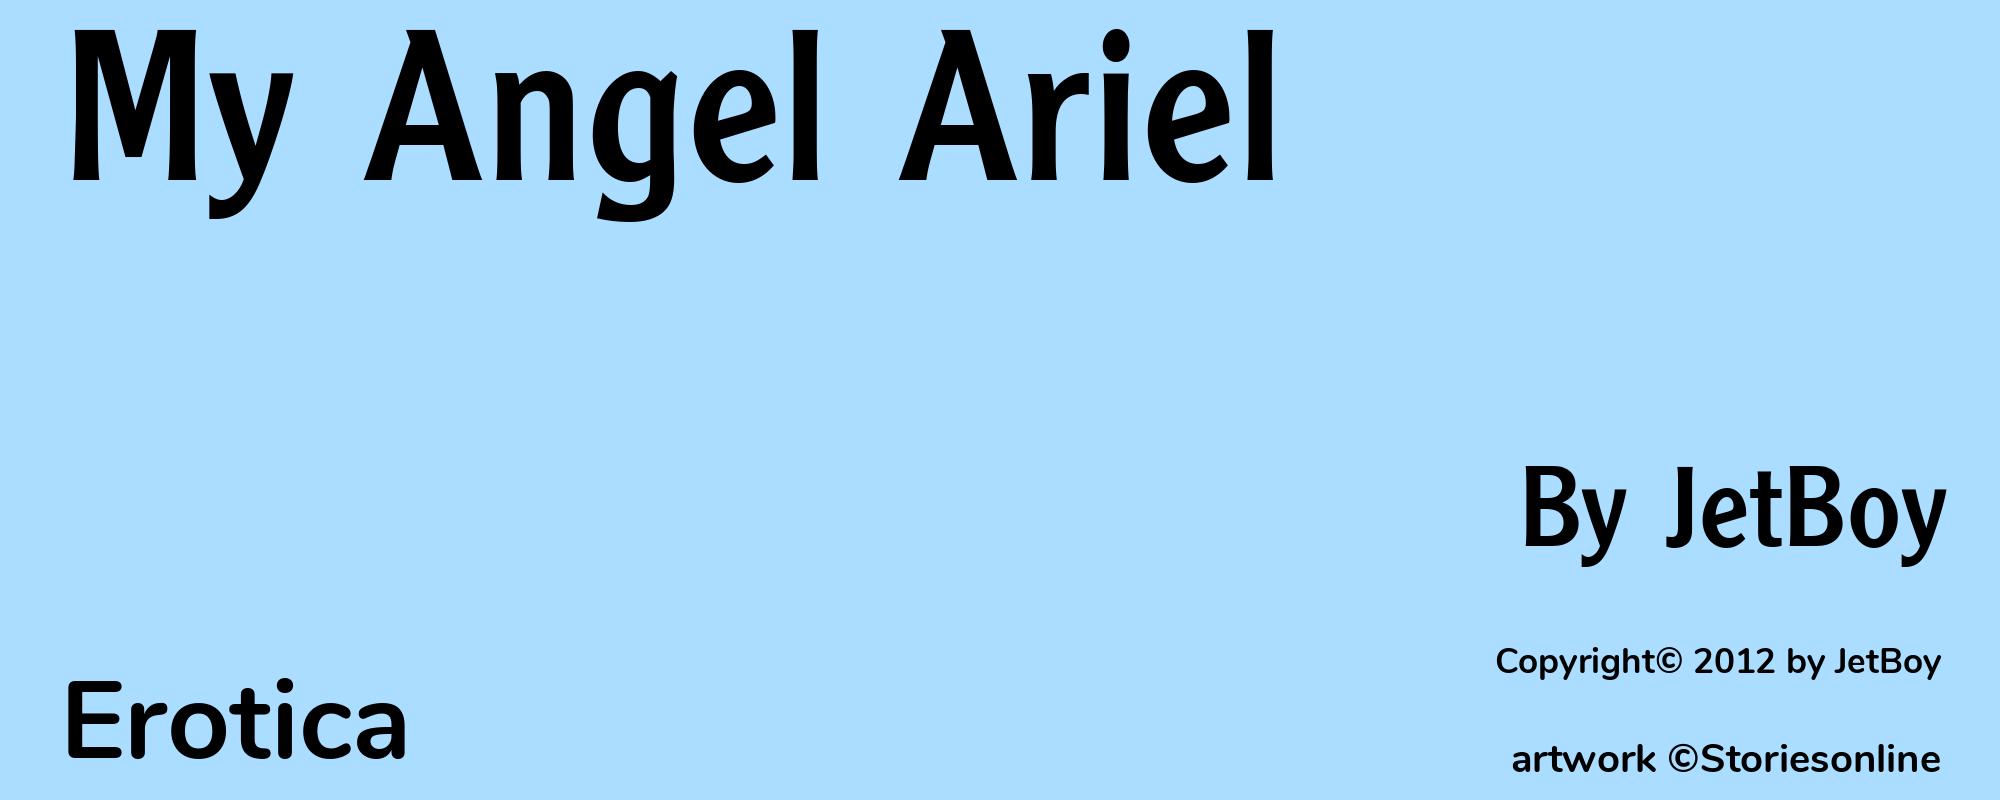 My Angel Ariel - Cover